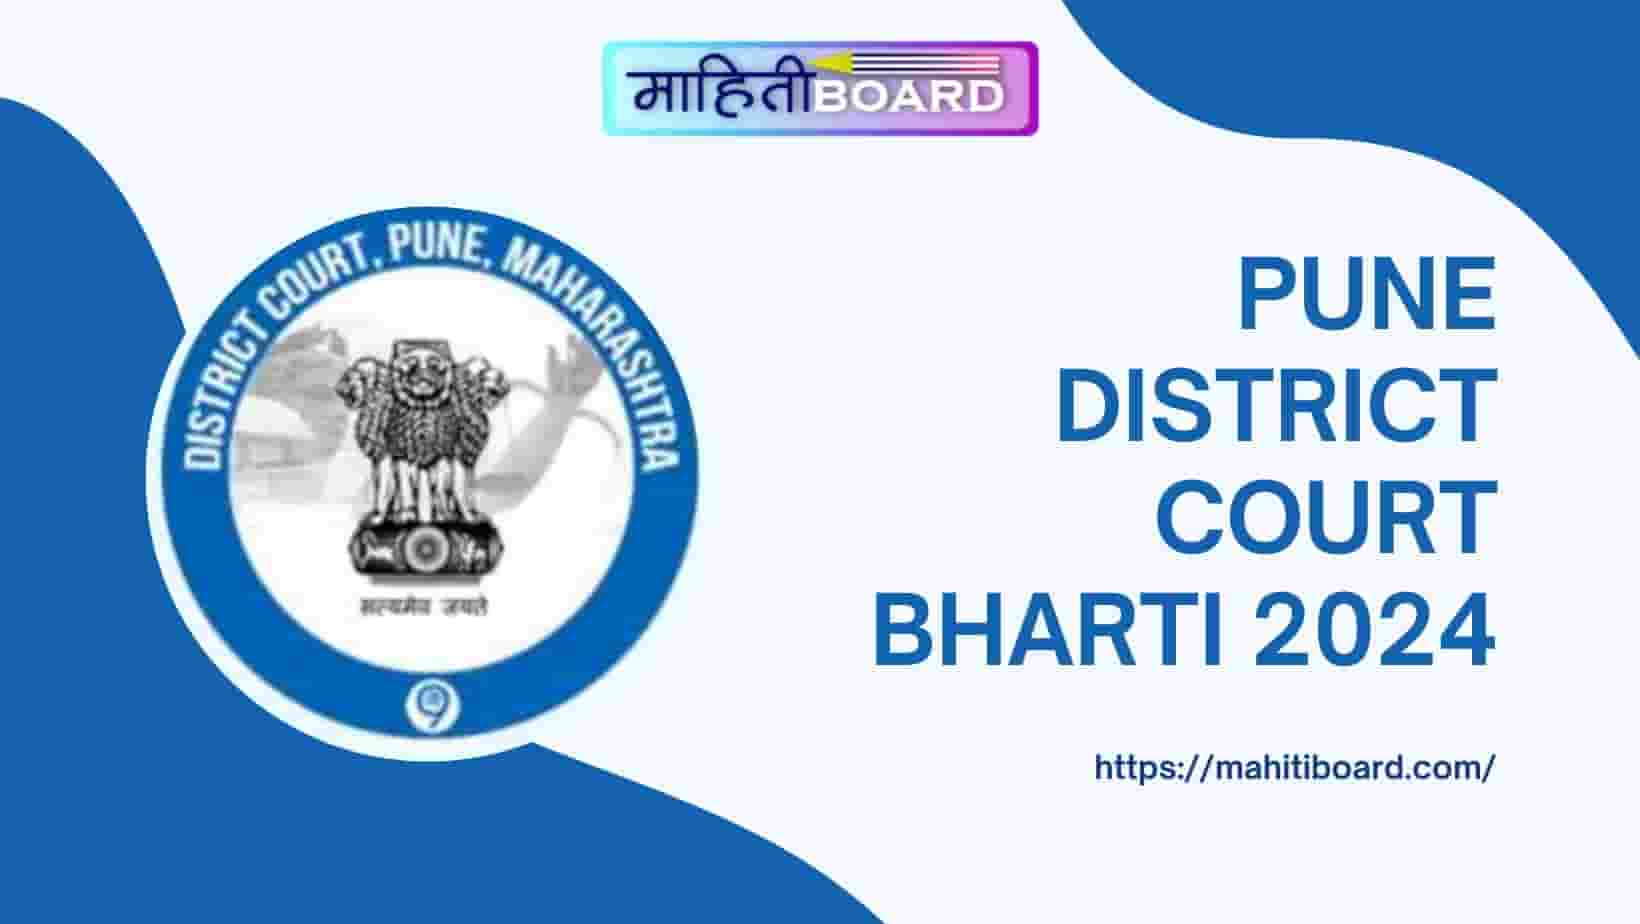 Pune District Court Bharti 2024